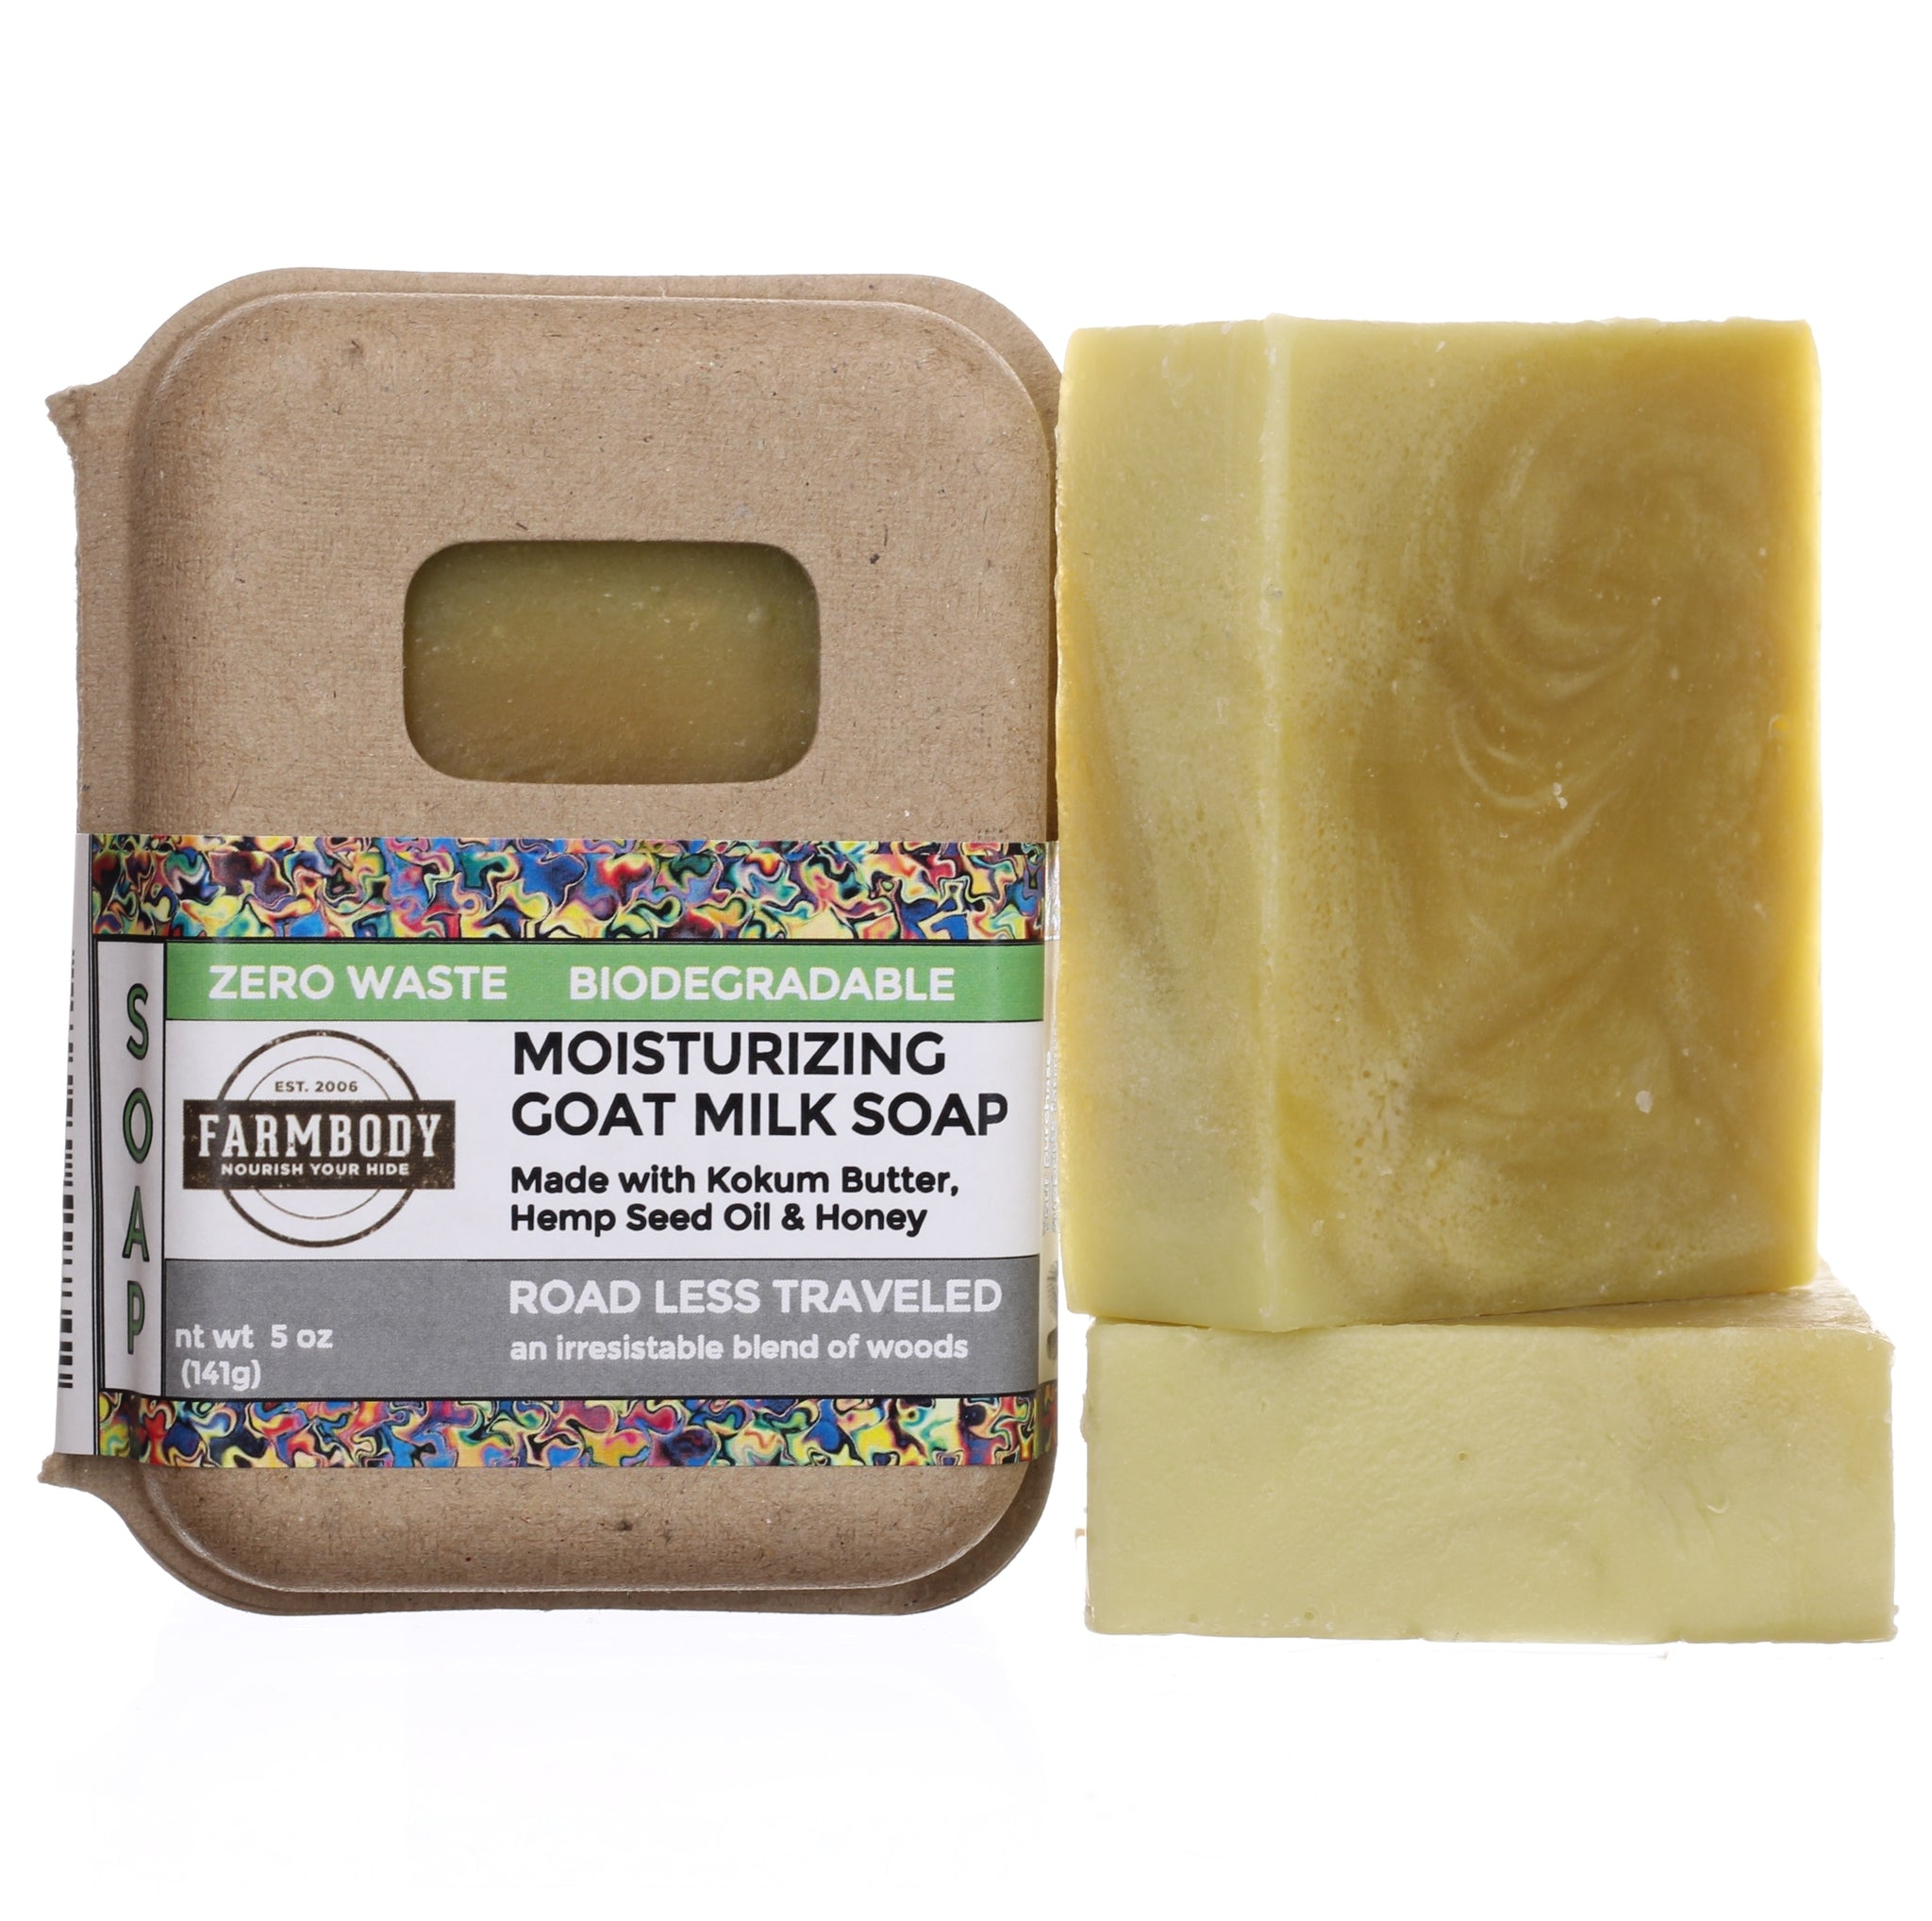 Moisturizing Goat Milk Bar Soap for Sensitive Skin | ROAD LESS TRAVELED - Farmbody